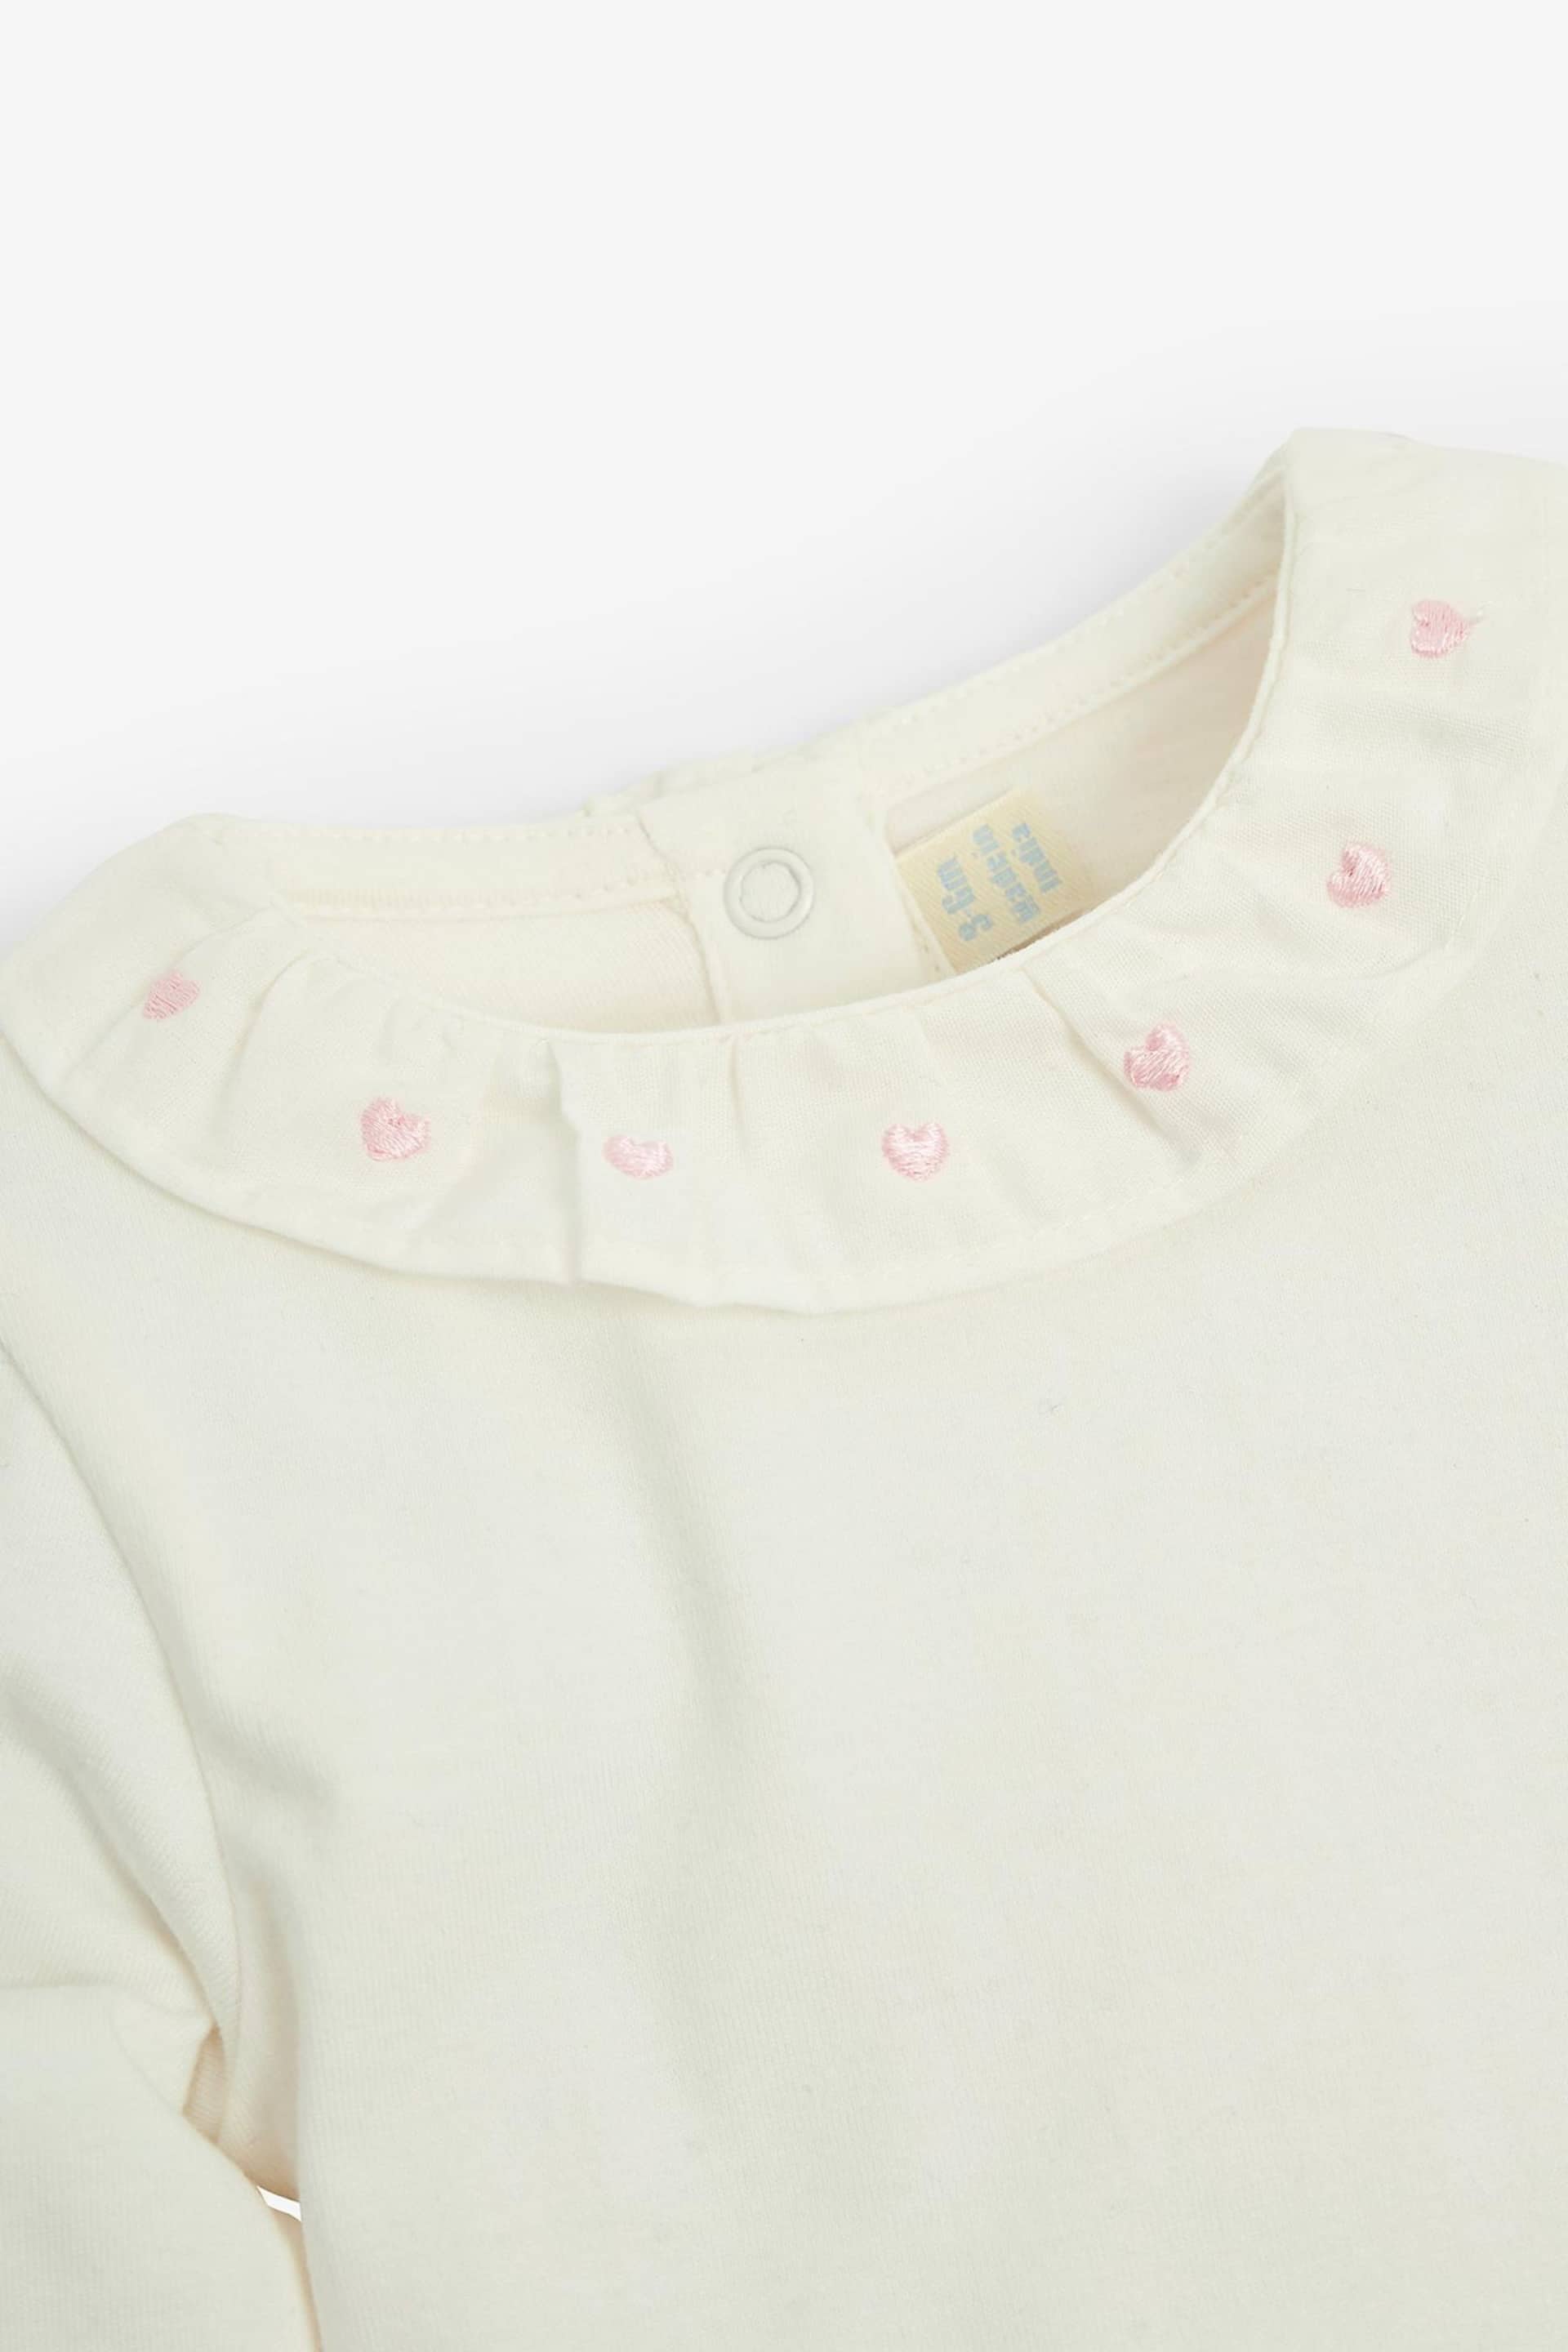 JoJo Maman Bébé Cream Heart Embroidered Collar Bodysuit - Image 2 of 3